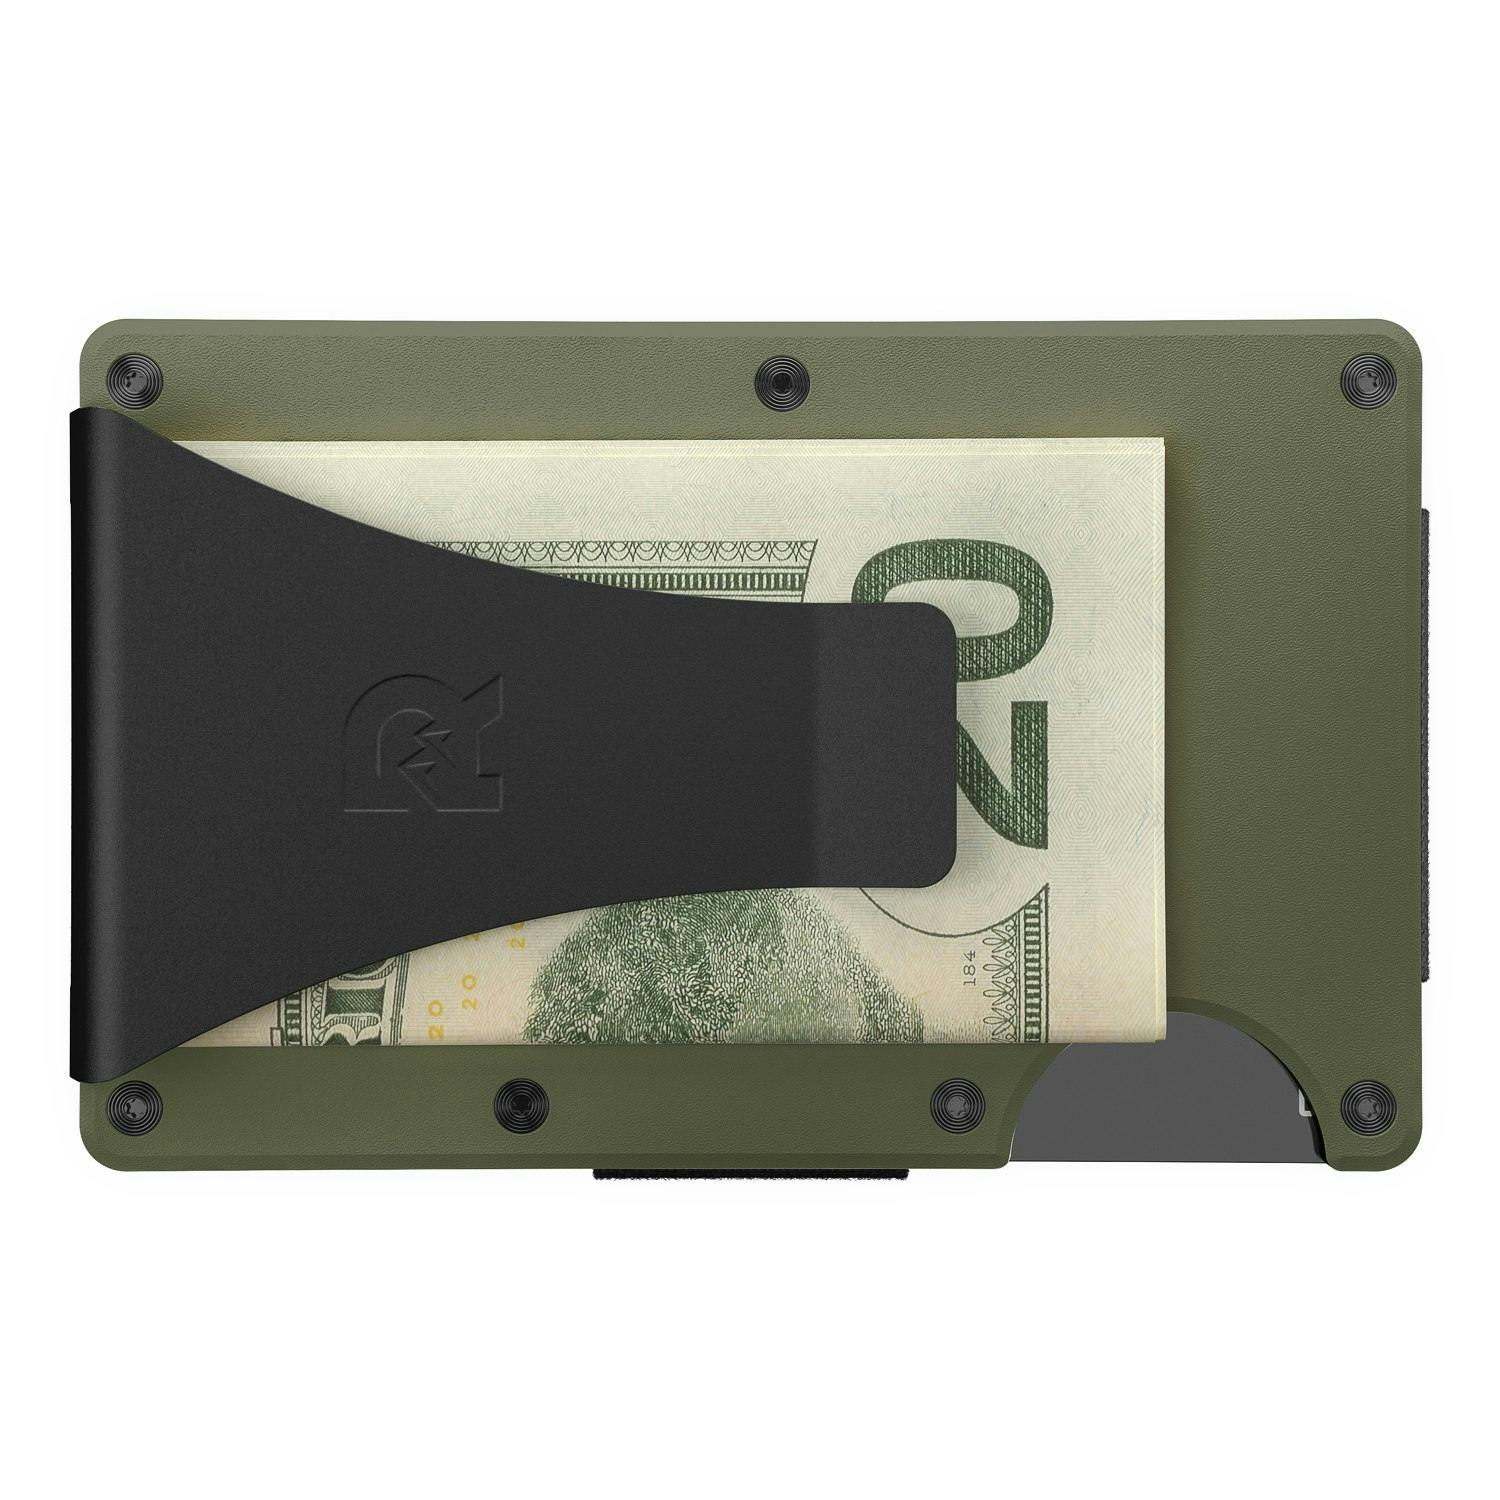 The Ridge Aluminum Wallet + Money Clip